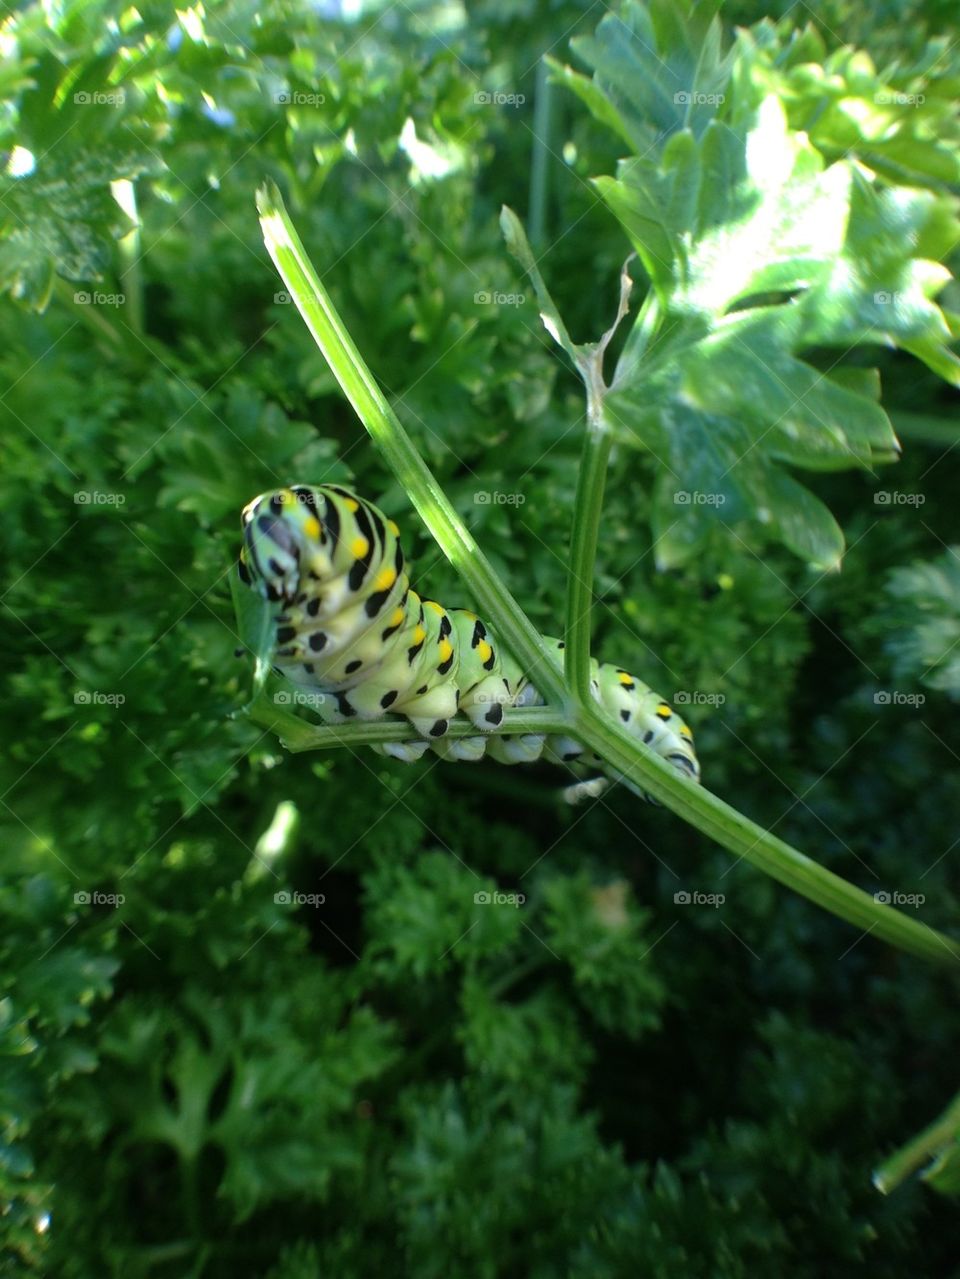 Caterpillar eating my garden